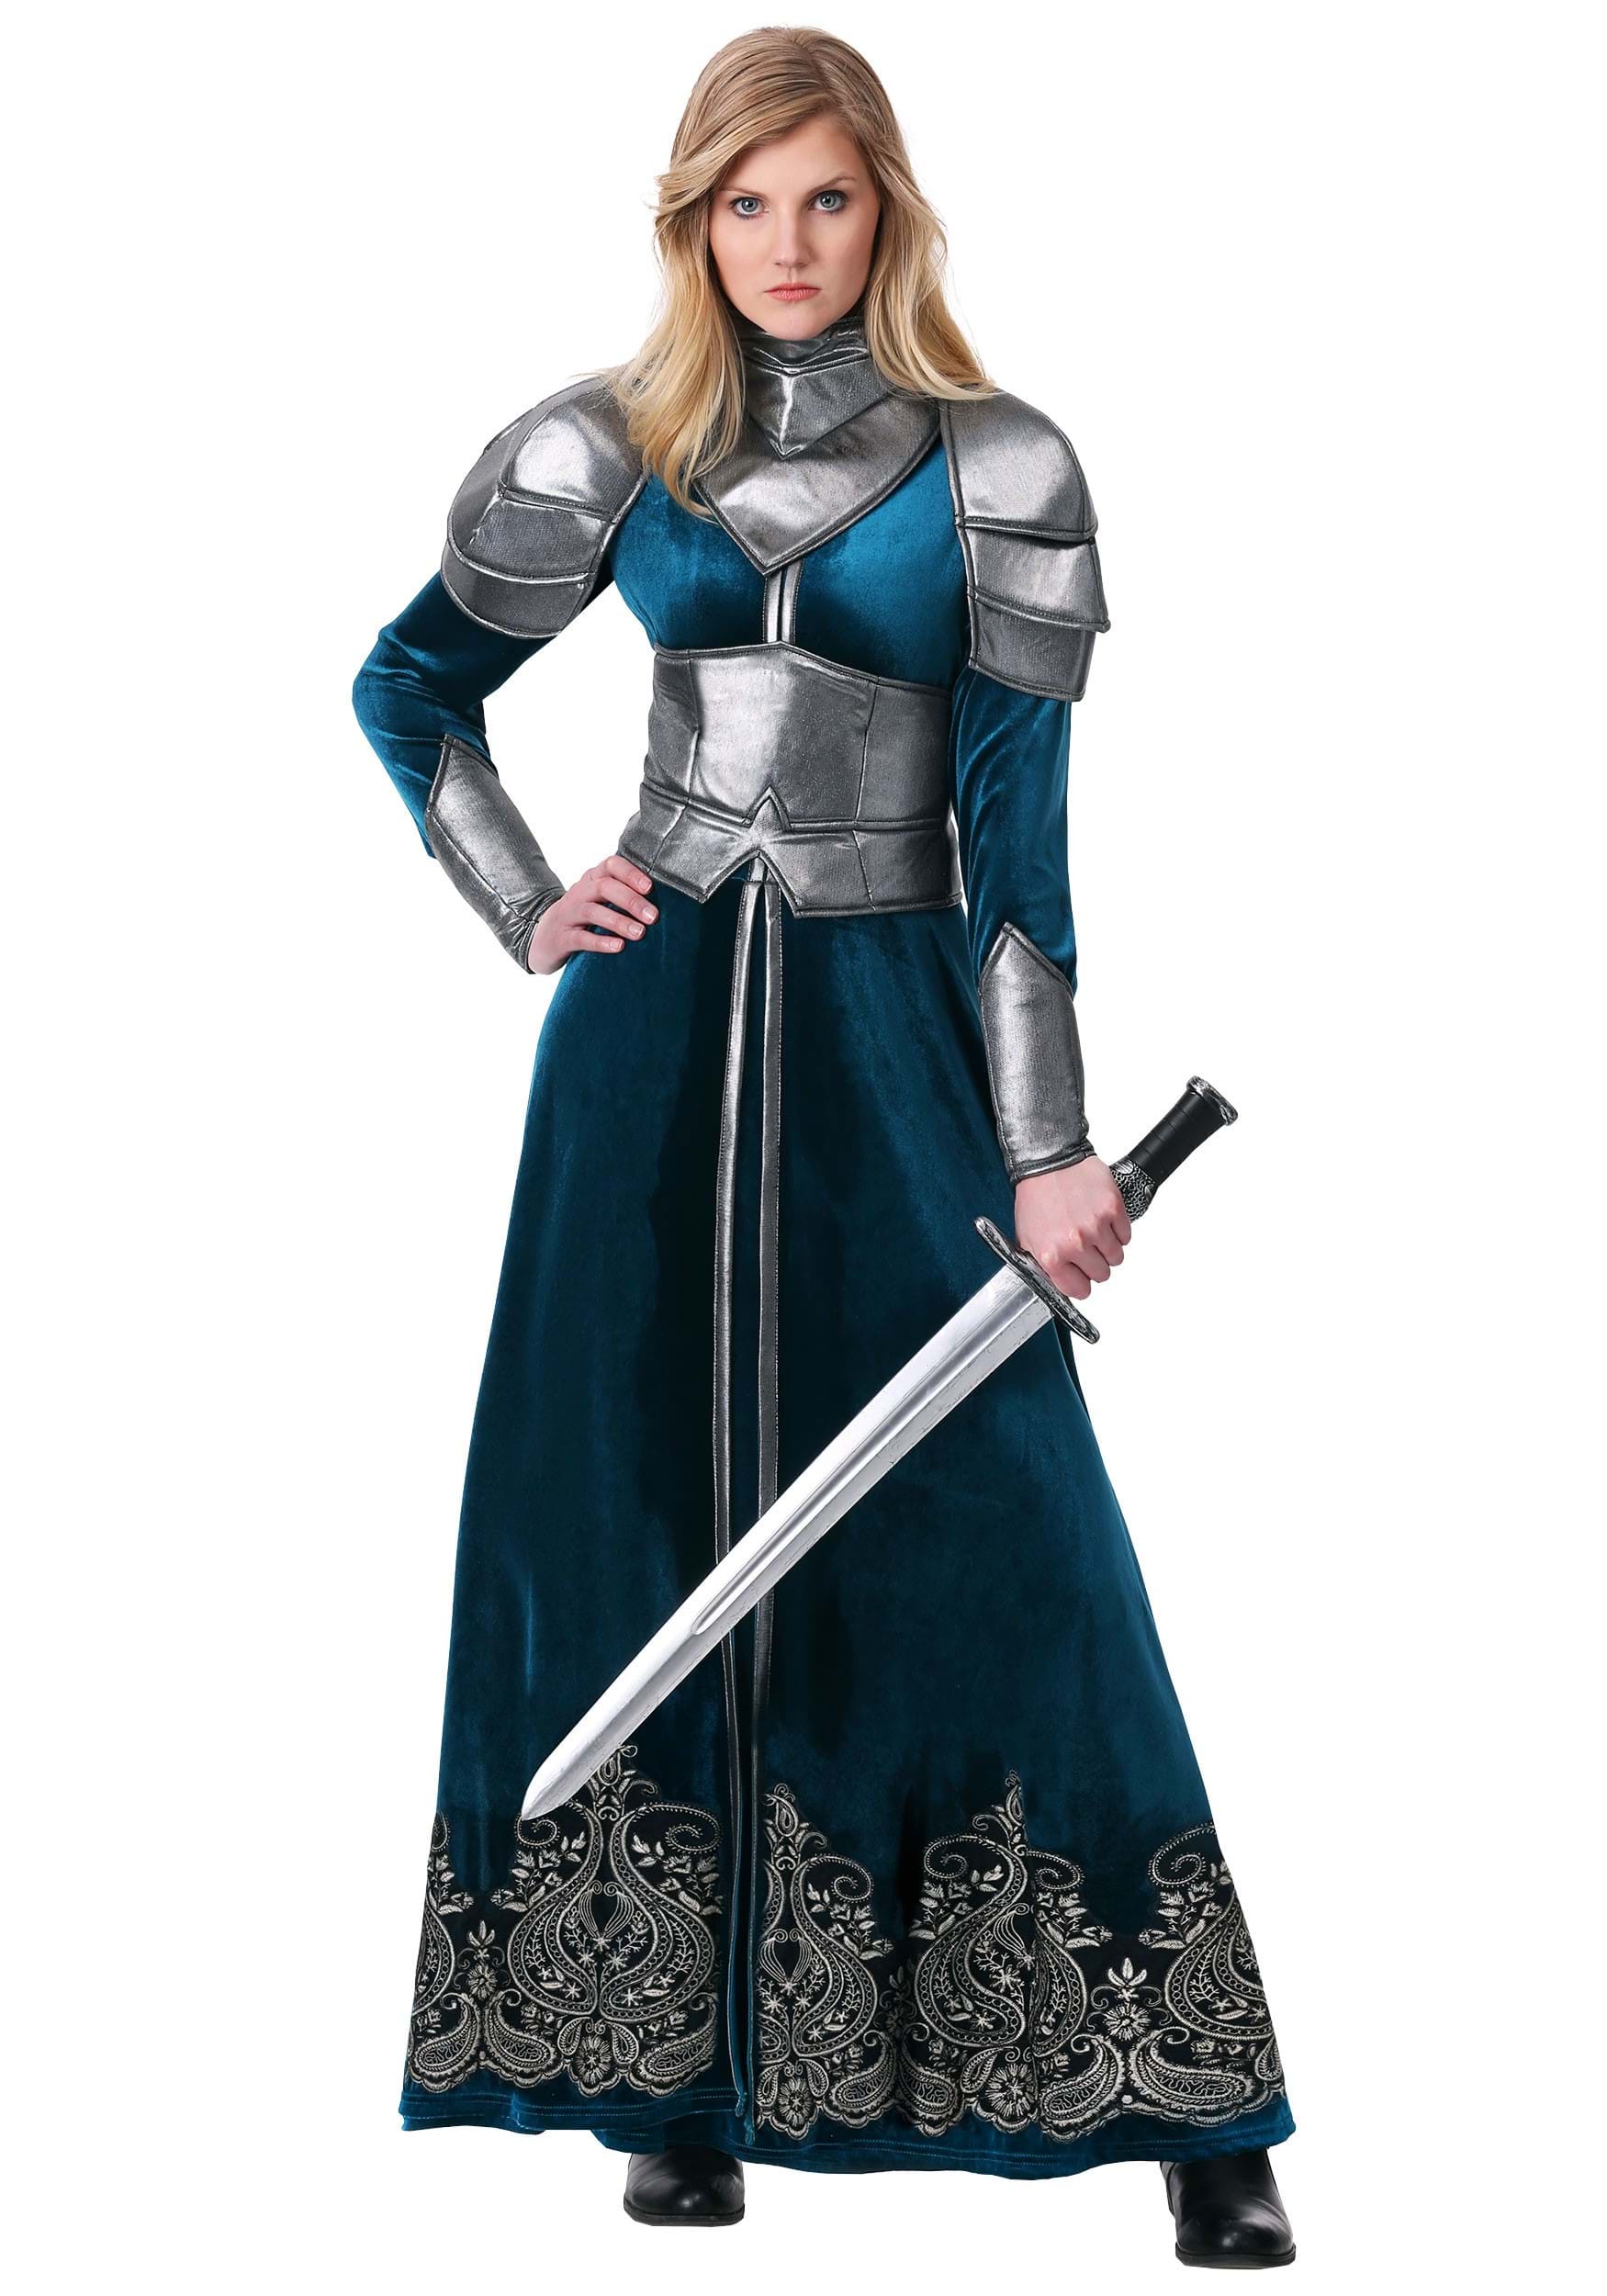 Medieval Warrior Costume for Women